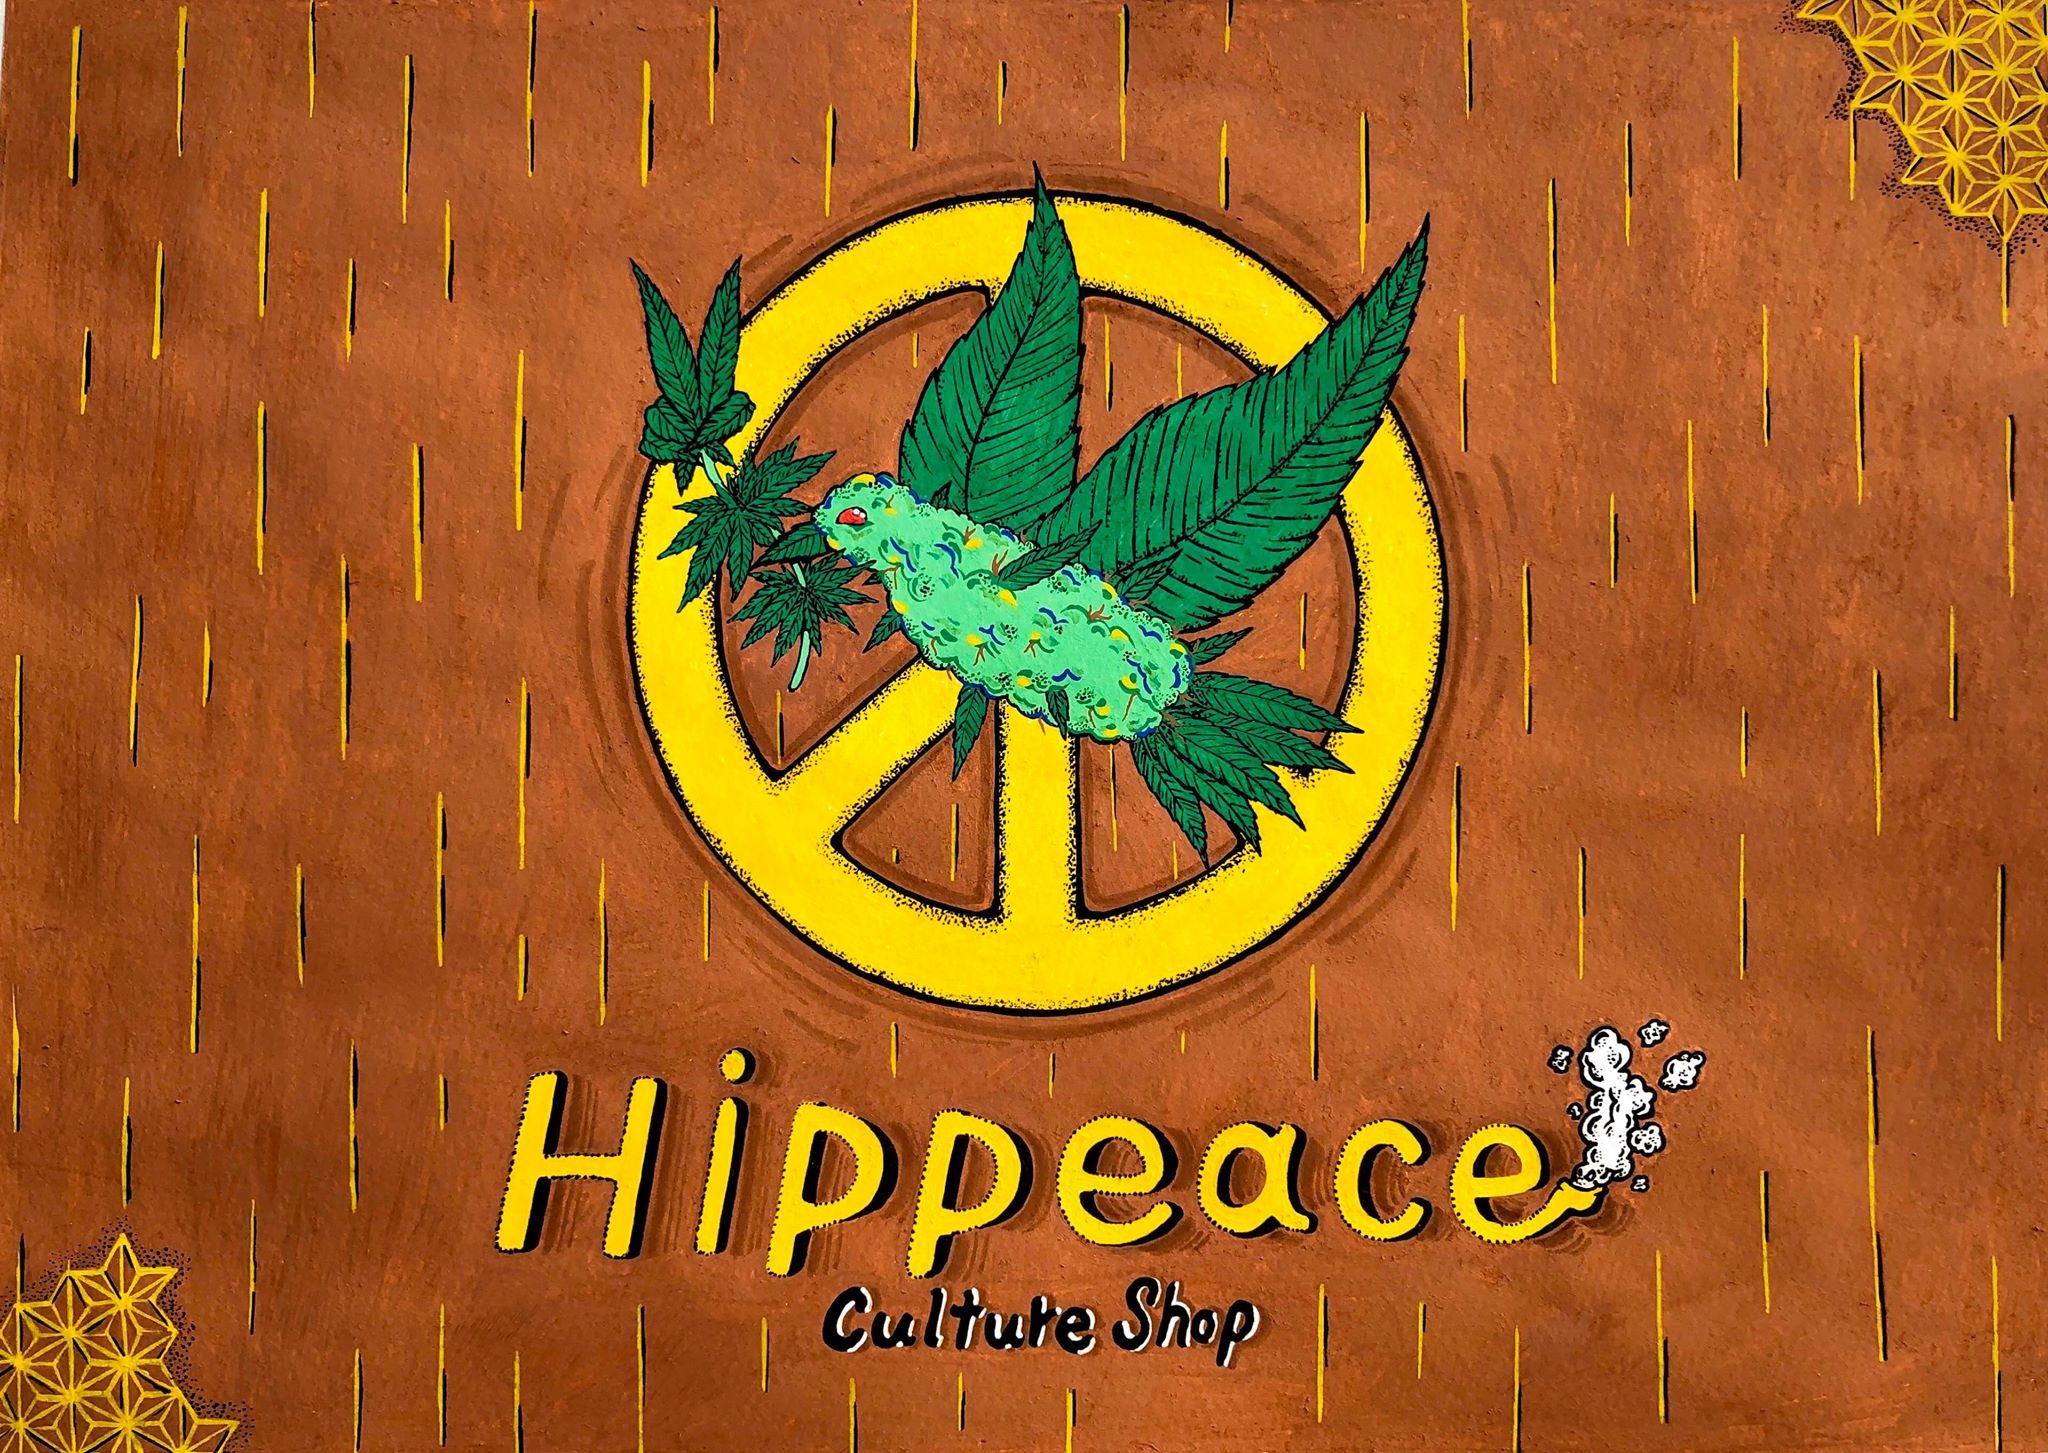 Culture Shop Hippeace